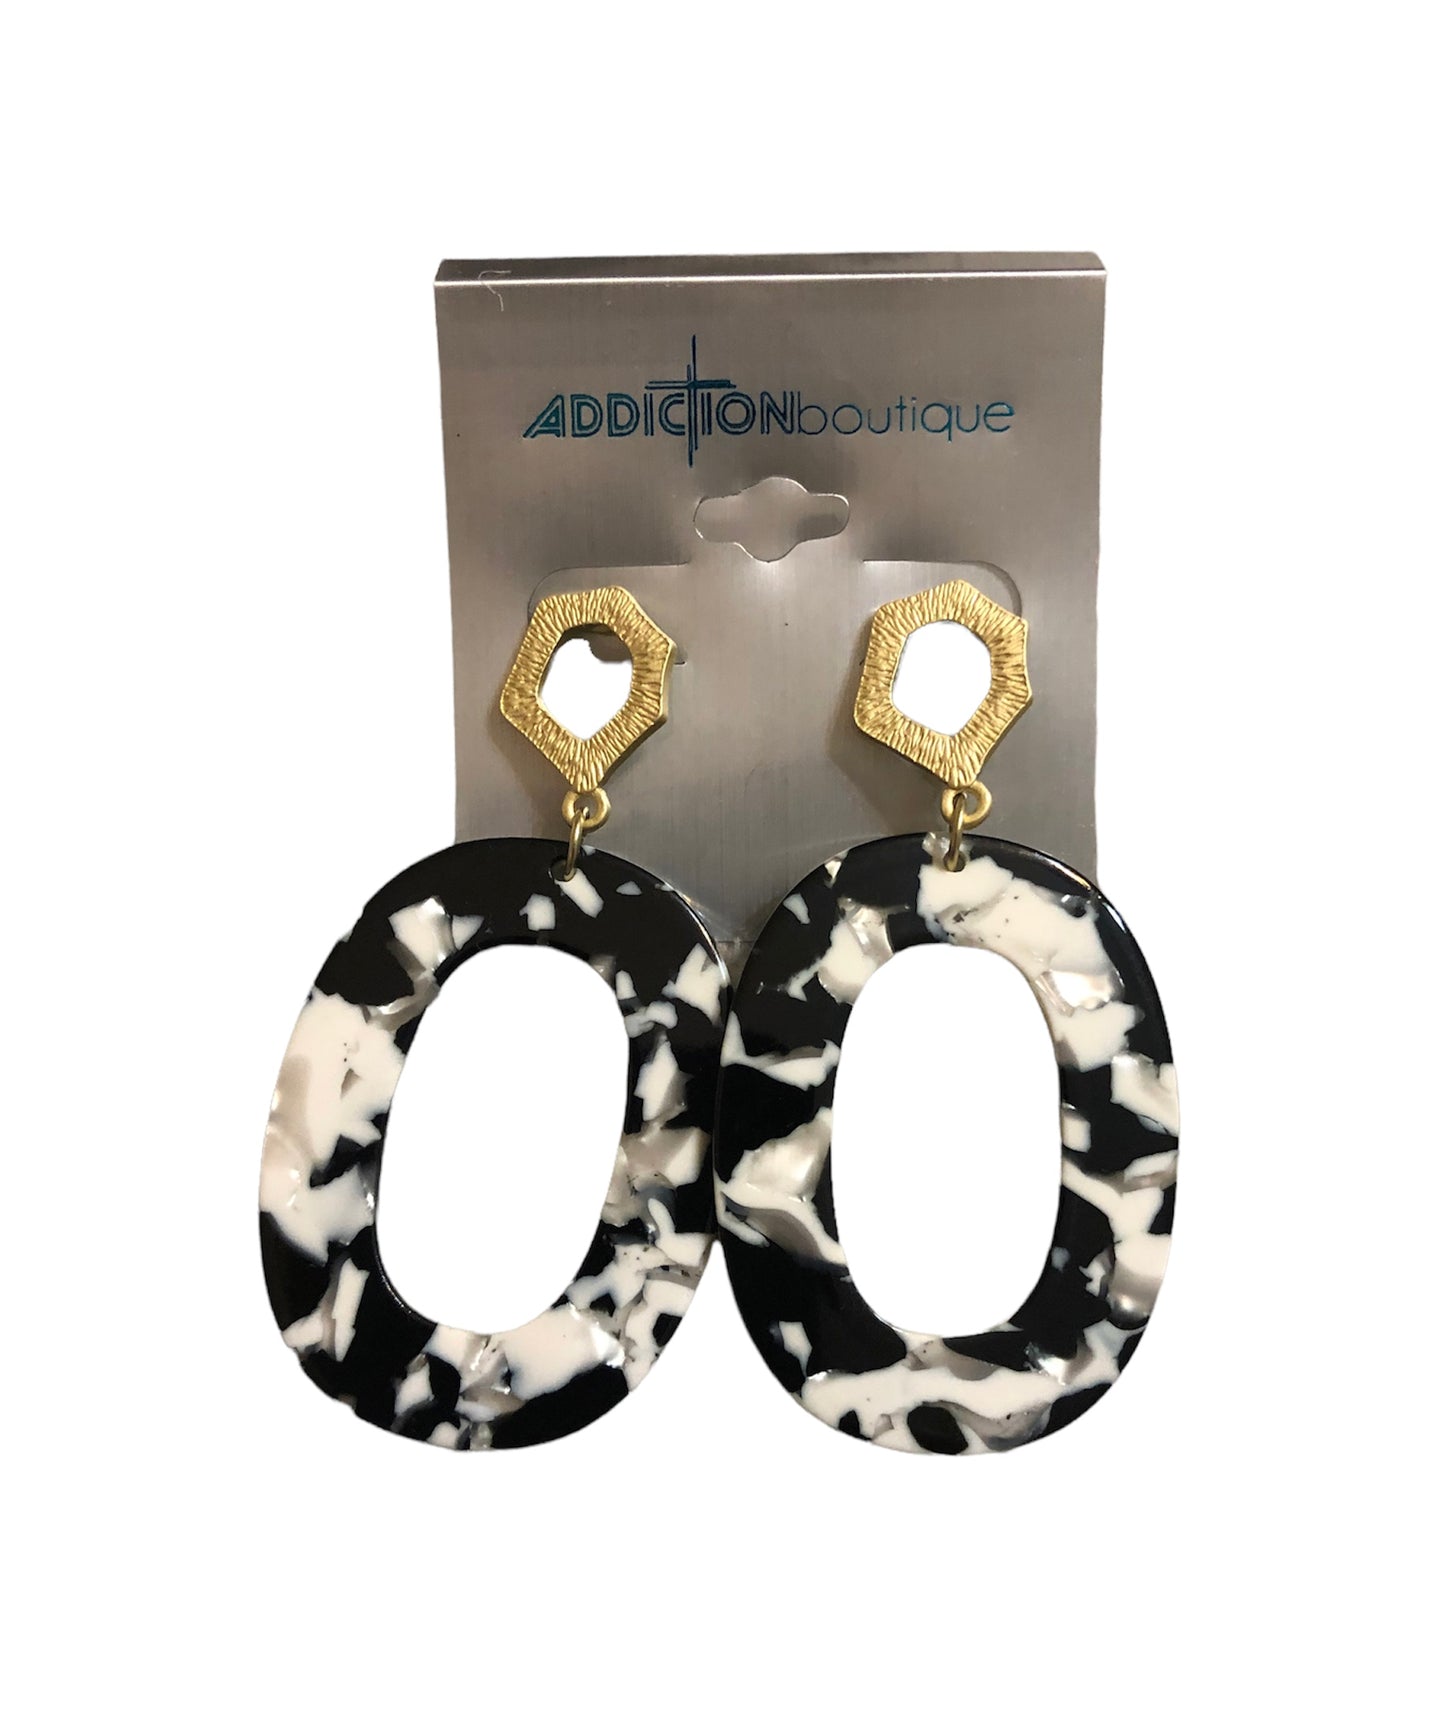 Coco’s Fall Acrylic Earrings